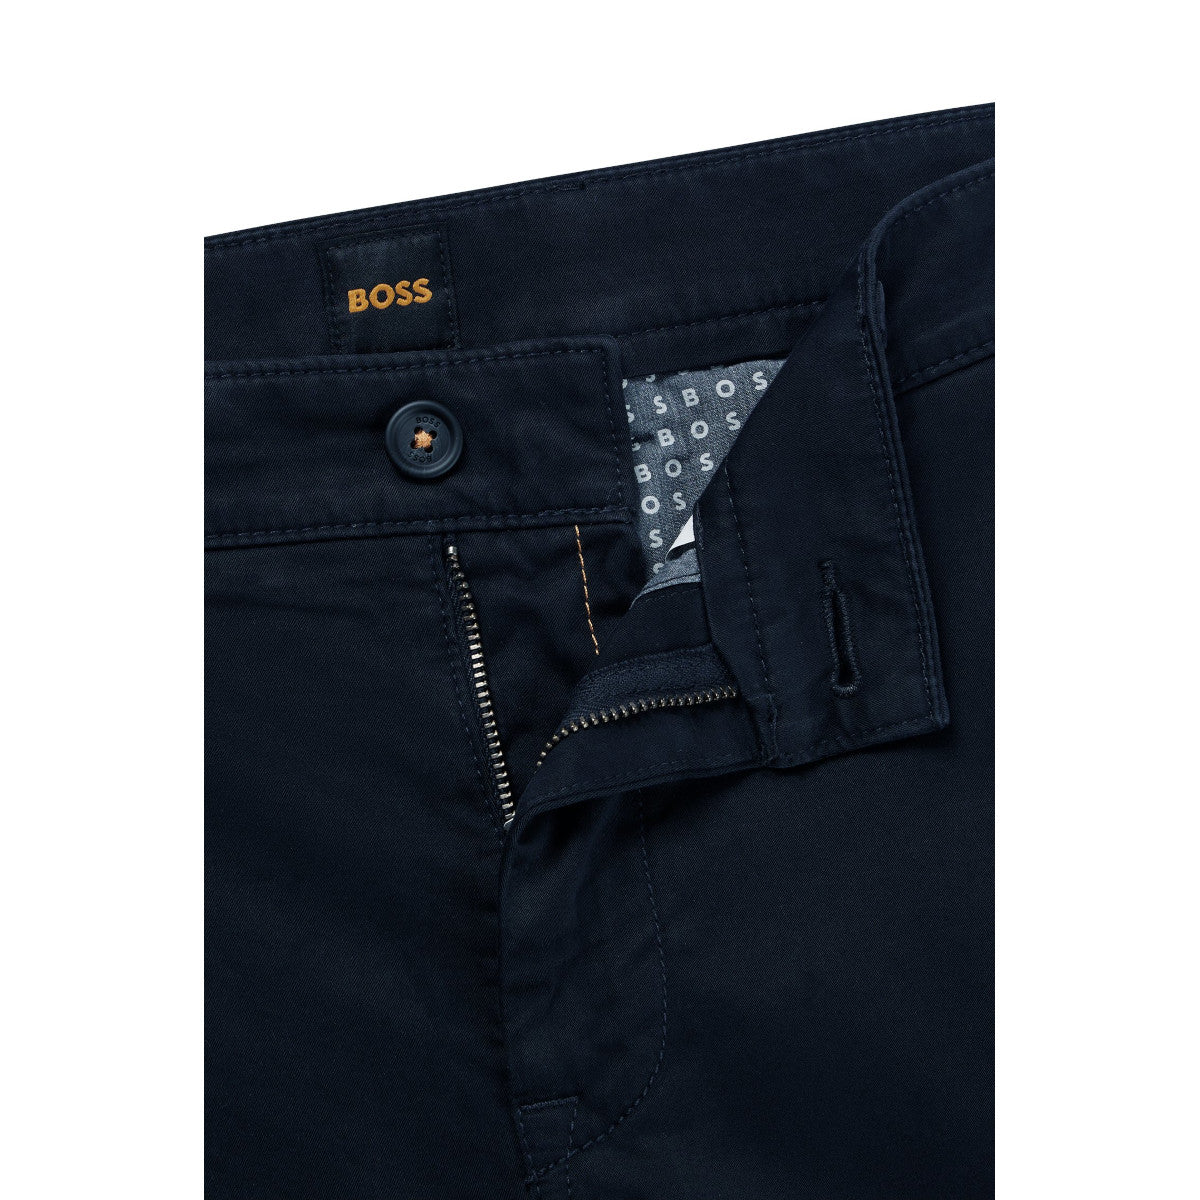 BOSS Orange Schino-Slim D Trousers 001 Black